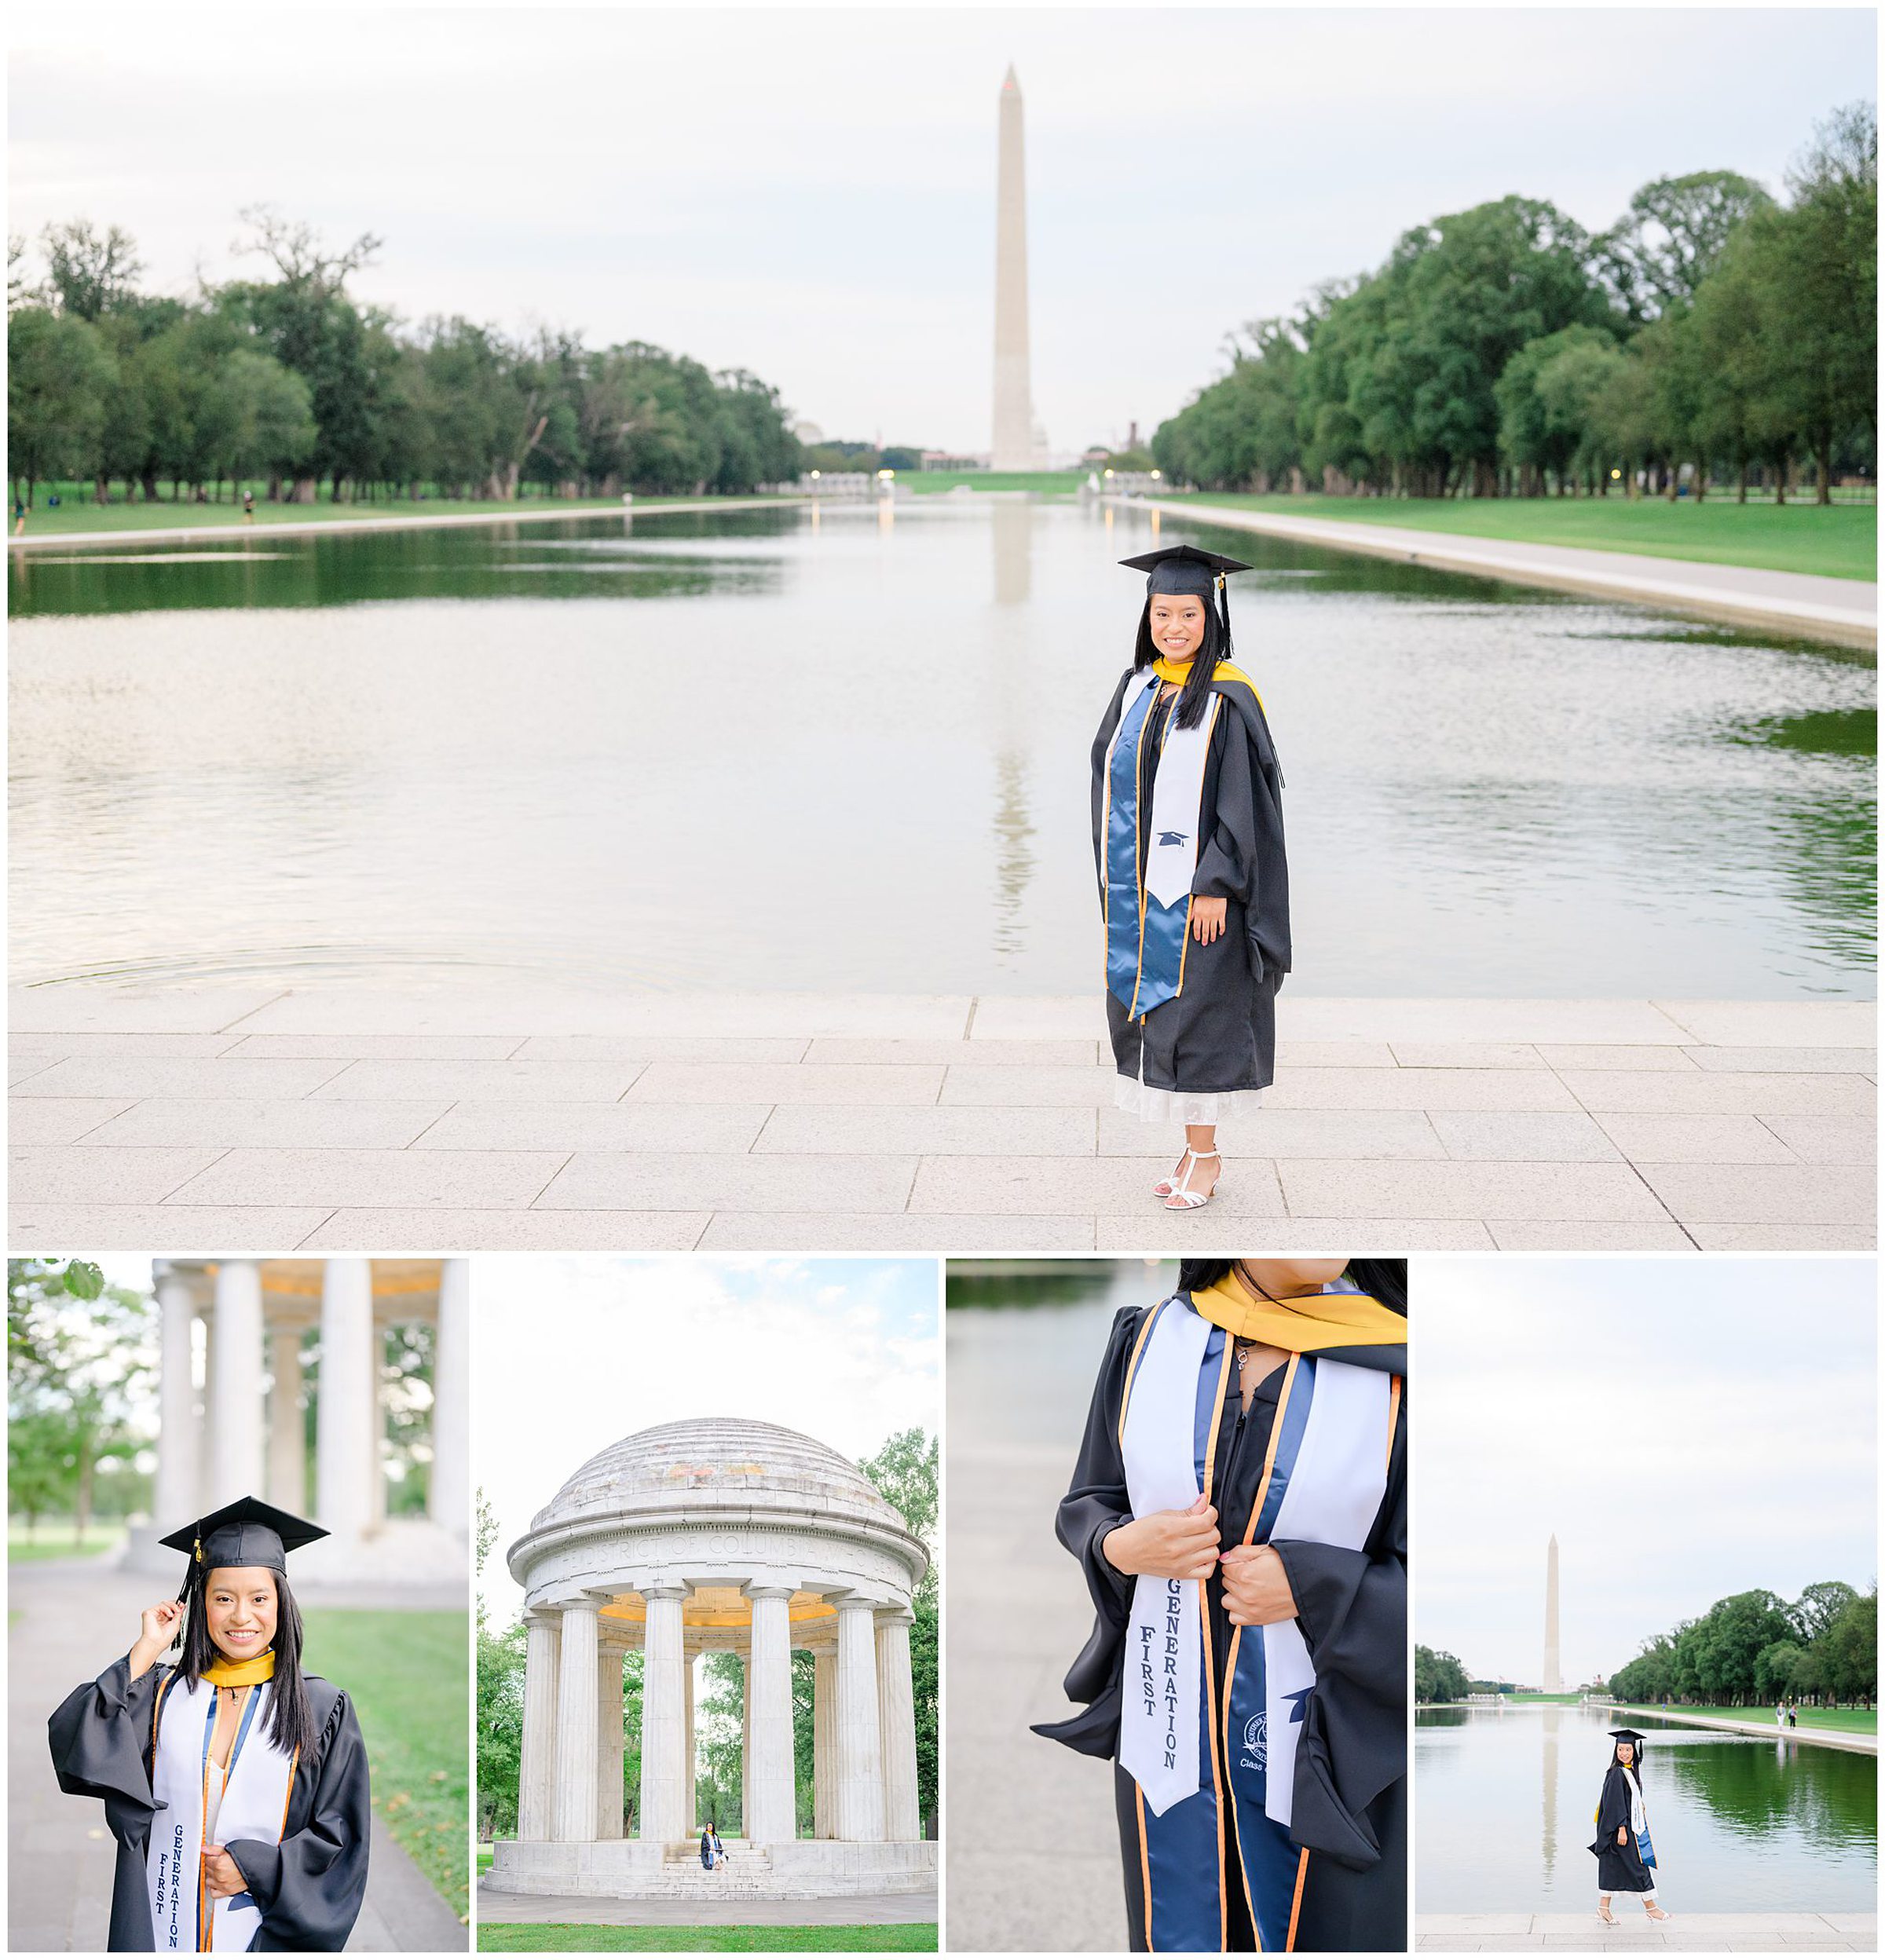 College graduation portrait session at the DC War Memorial in Washington, D.C. photographed by Baltimore Grad Photographer Cait Kramer.